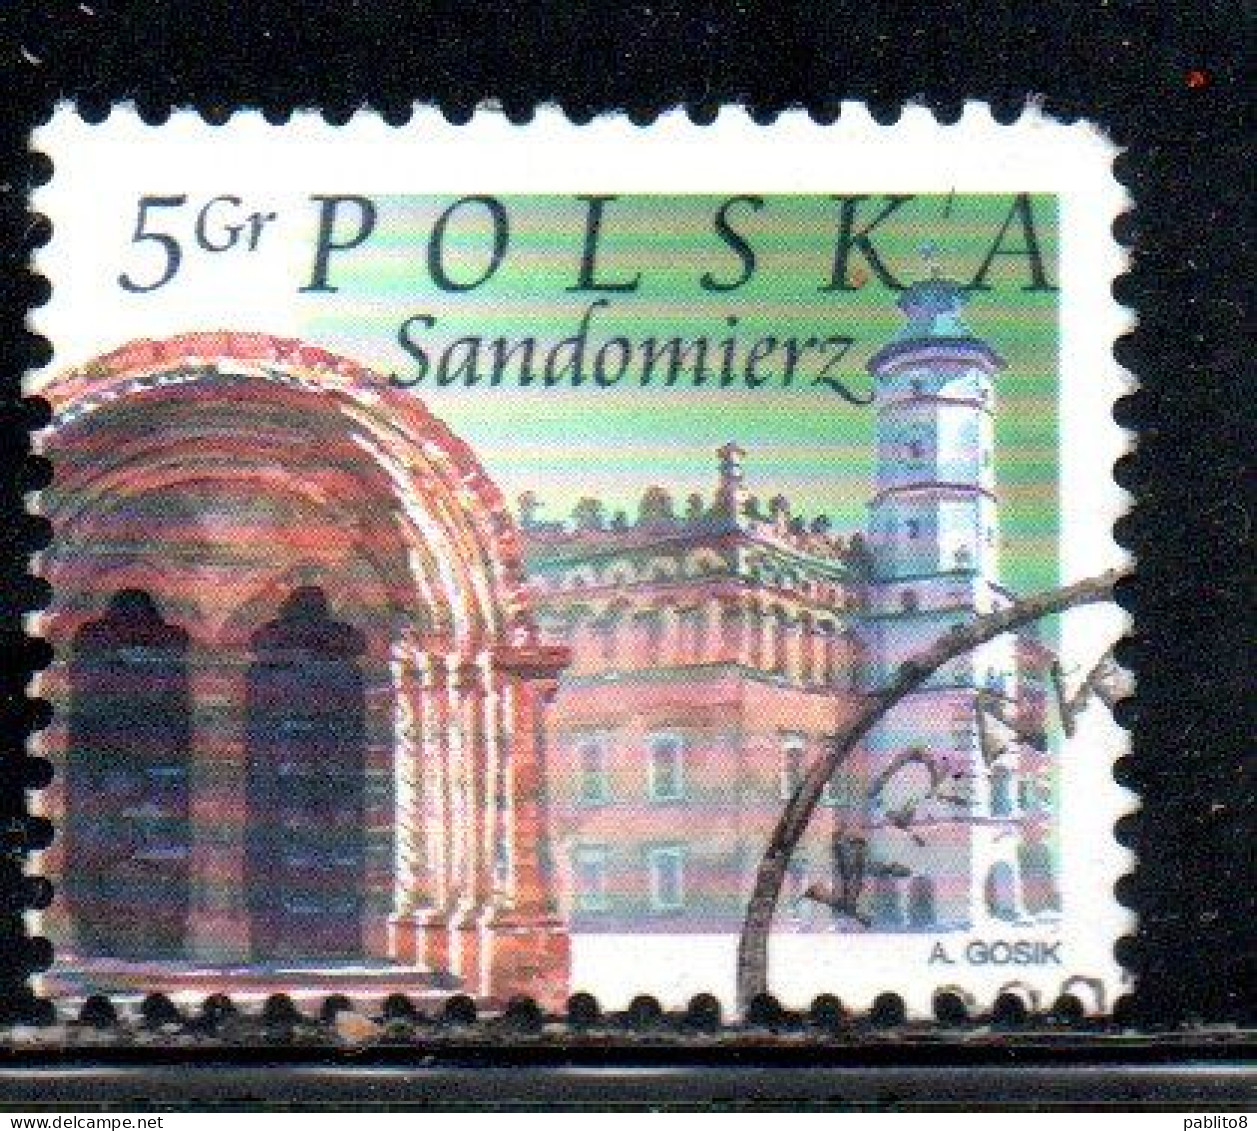 POLONIA POLAND POLSKA 2004 CITY TOWN HALL CHURCH ARCHWAY SANDOMIERZ 5g USATO USED OBLITERE' - Oblitérés